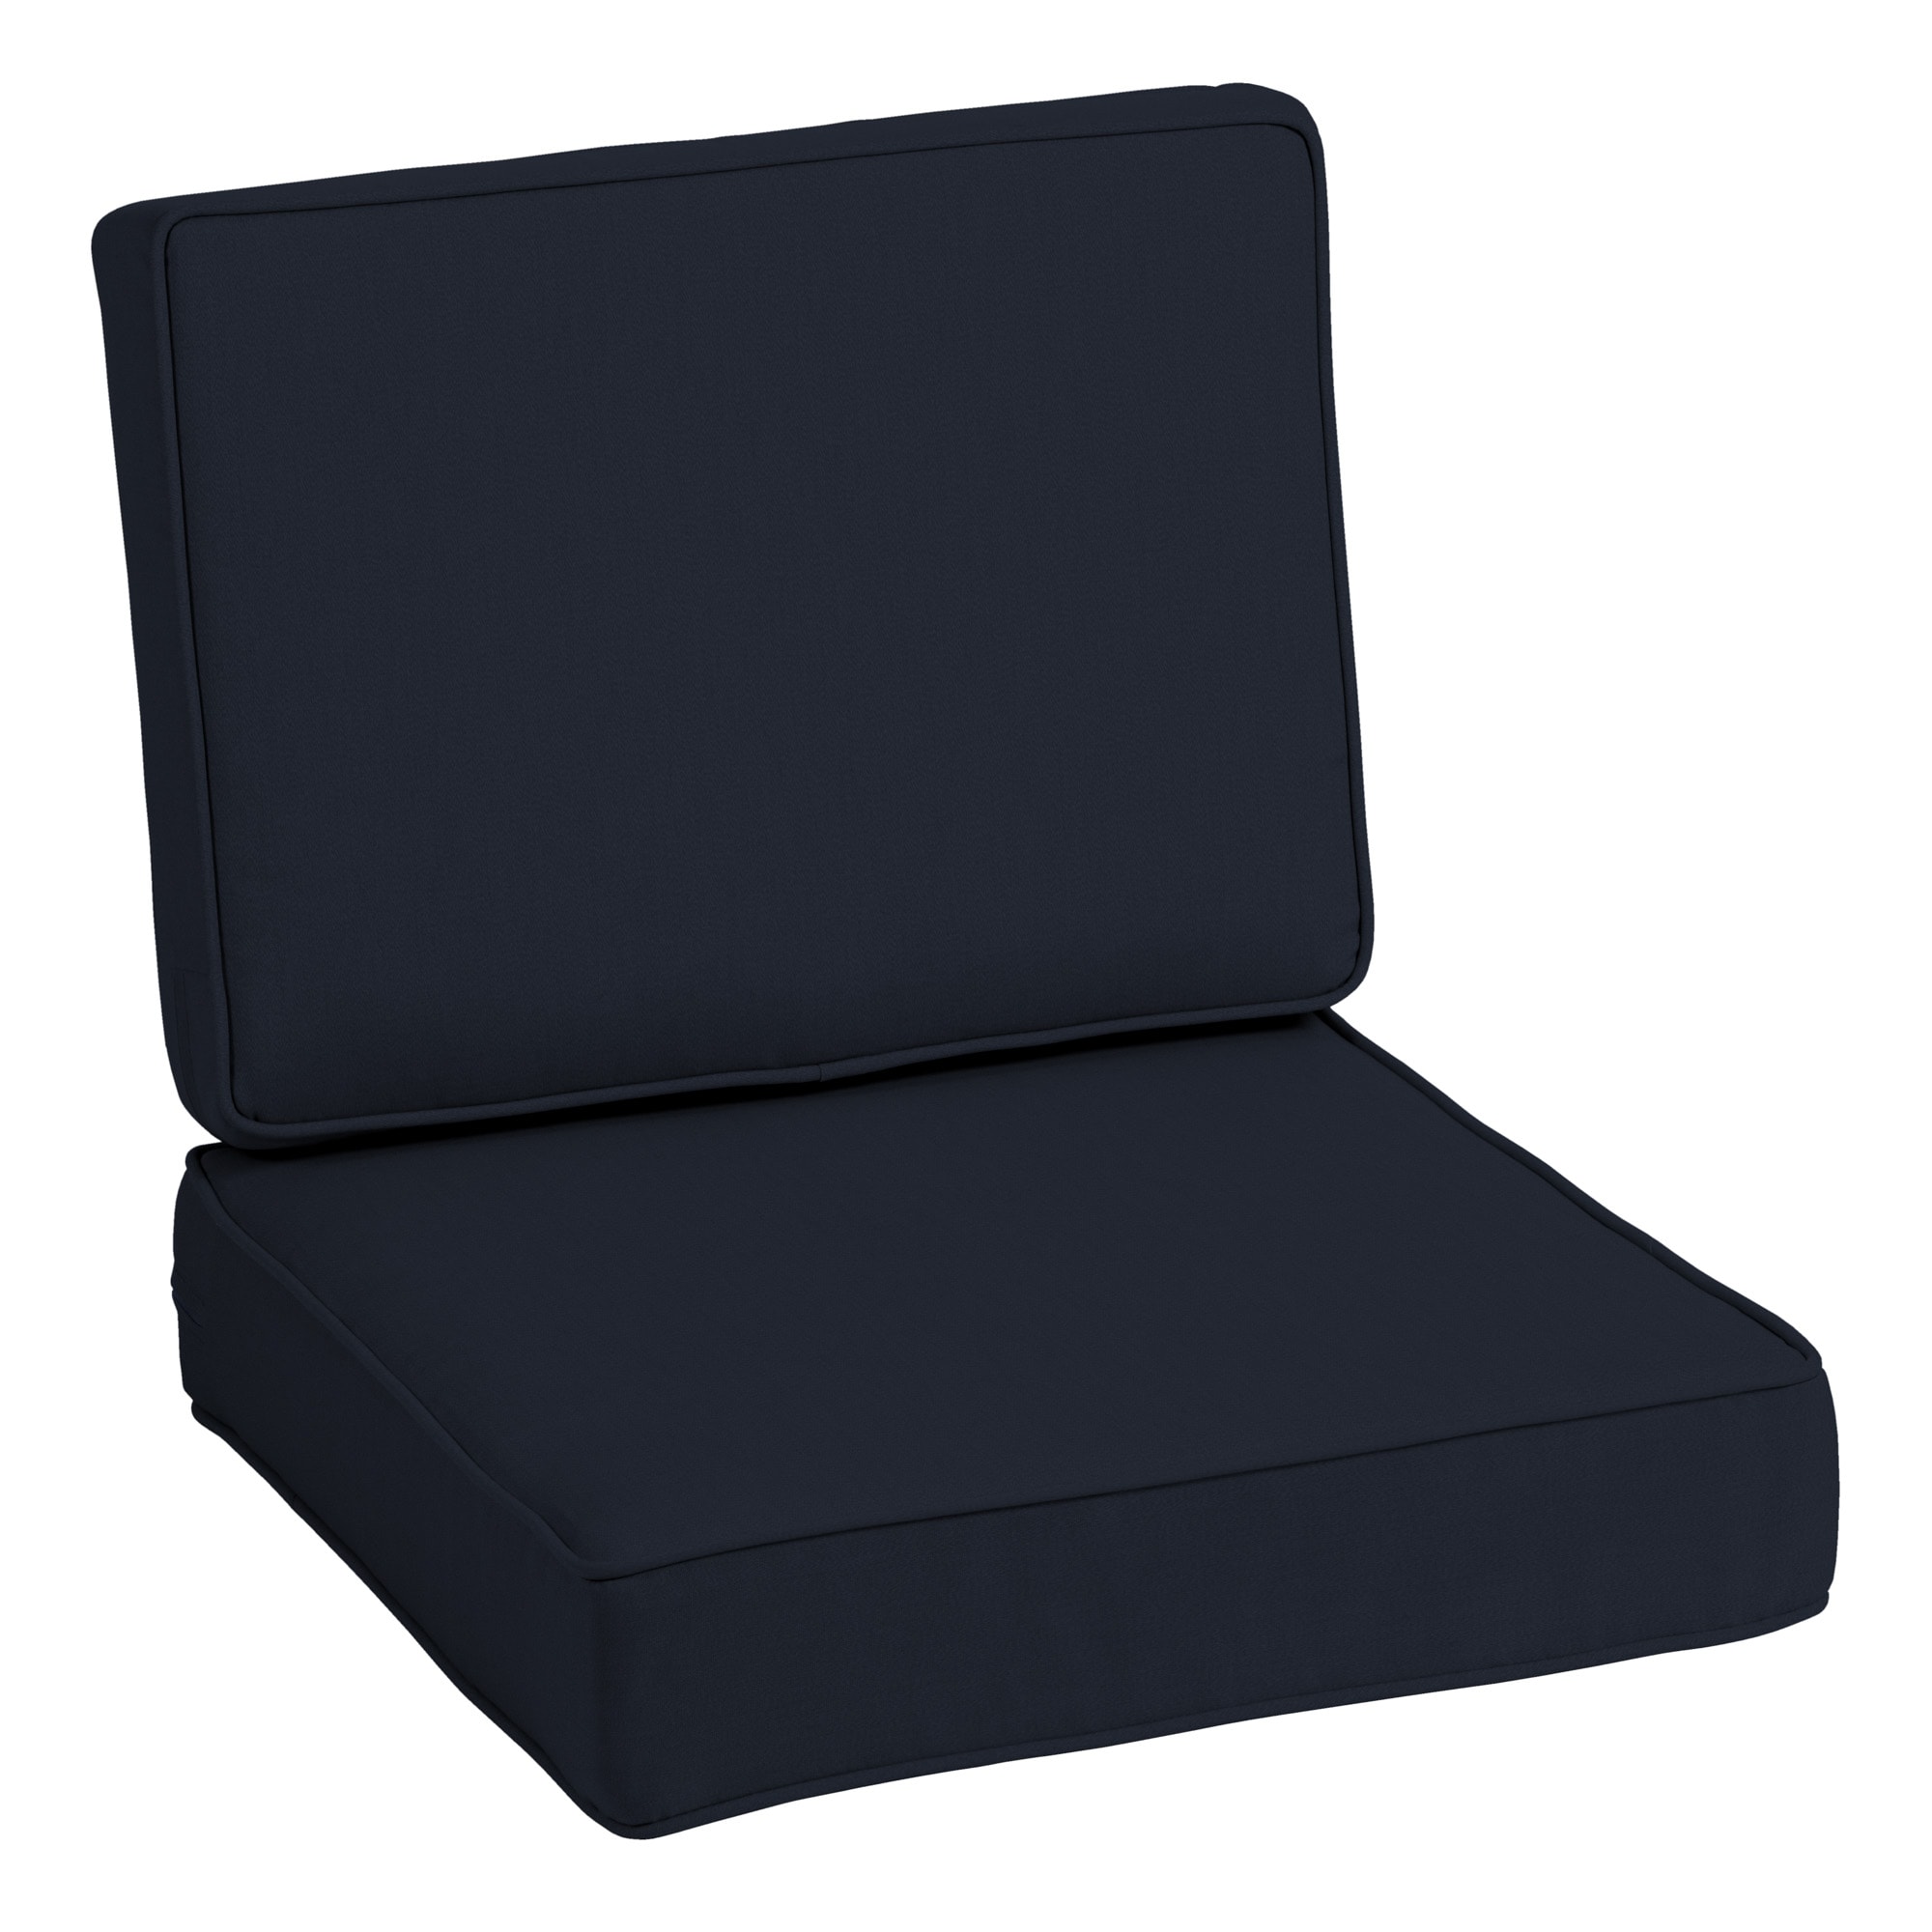 Arden Selections ProFoam Performance Outdoor Deep Seating Cushion Set 22 x 22, Sand Cream